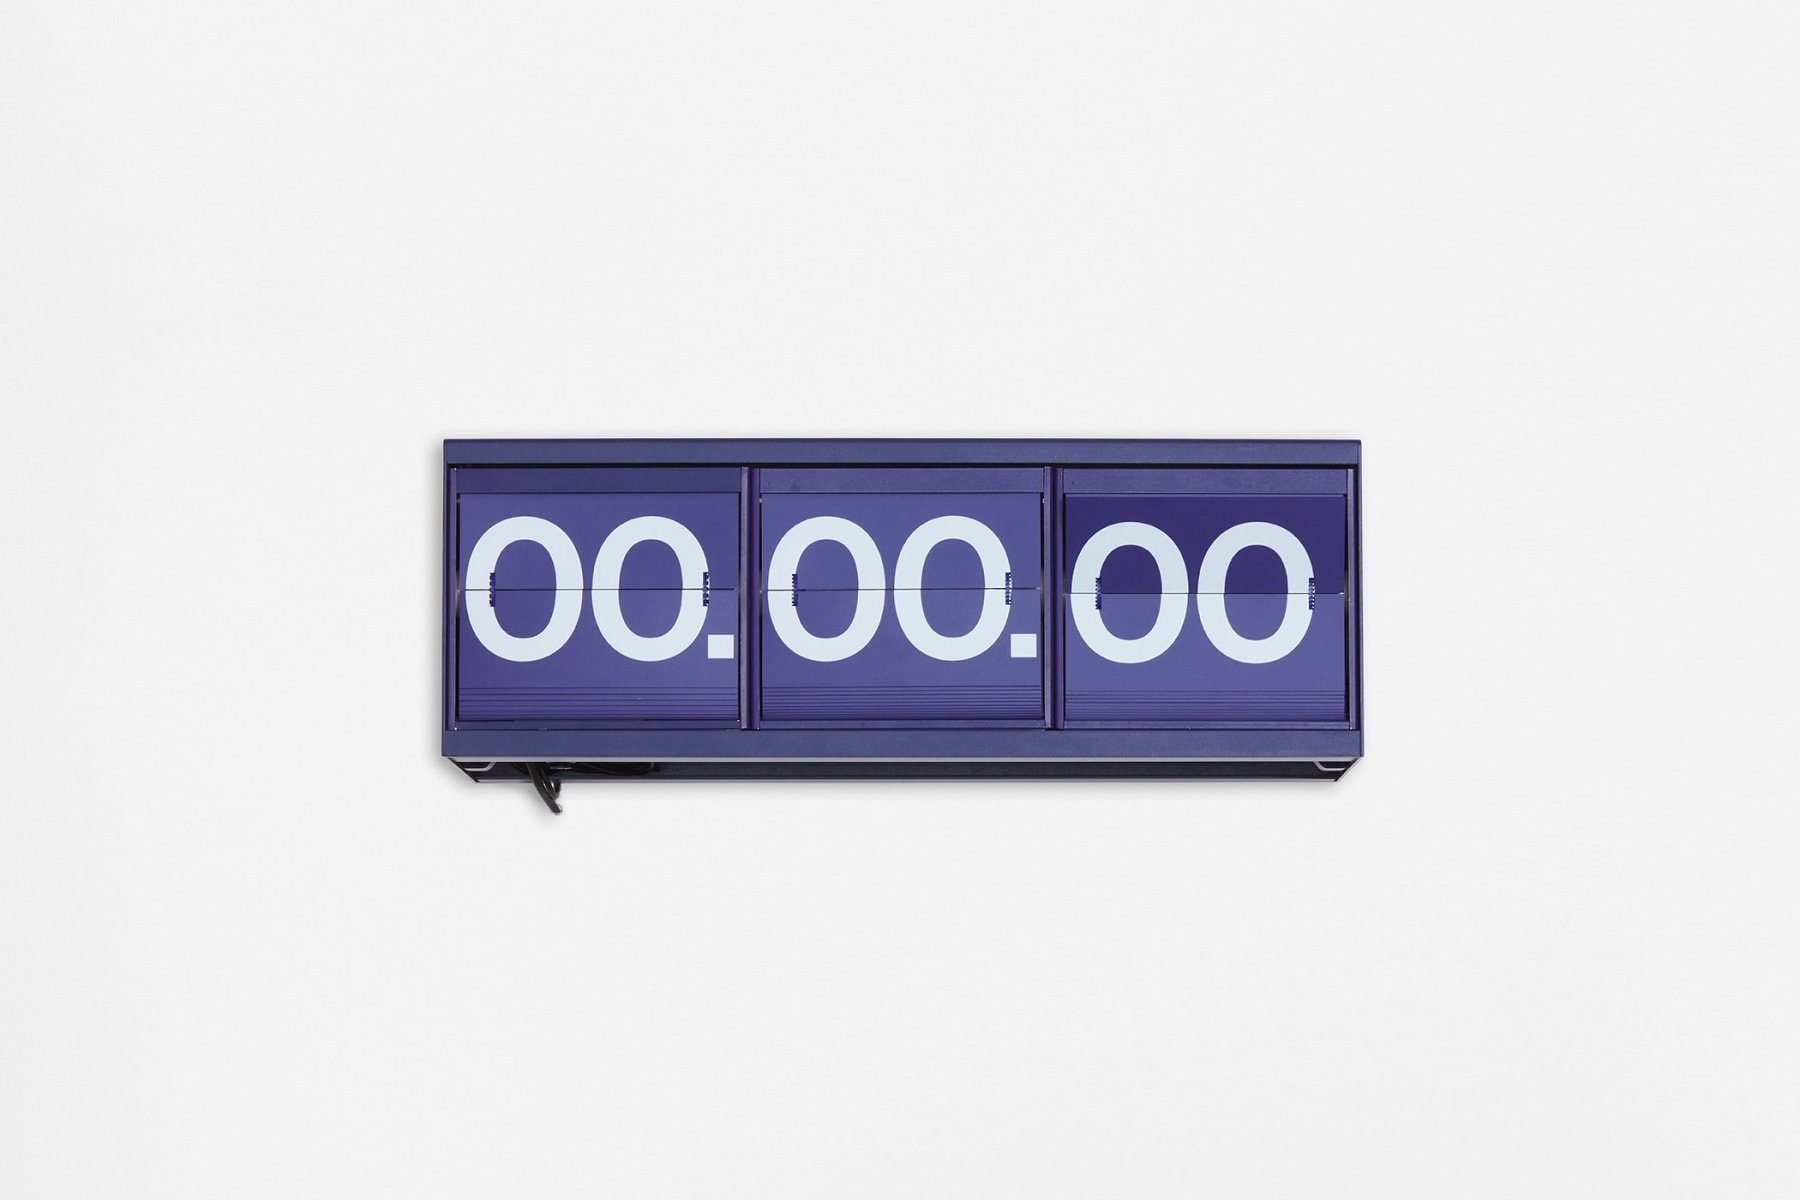   00.00.00   2022  Swiss Federal Railways split-flap display clock, GPS receiver  19 3/8 x 6 3/4 x 8 1/4 inches (49.2 x 17.1 x 20.9 cm) 